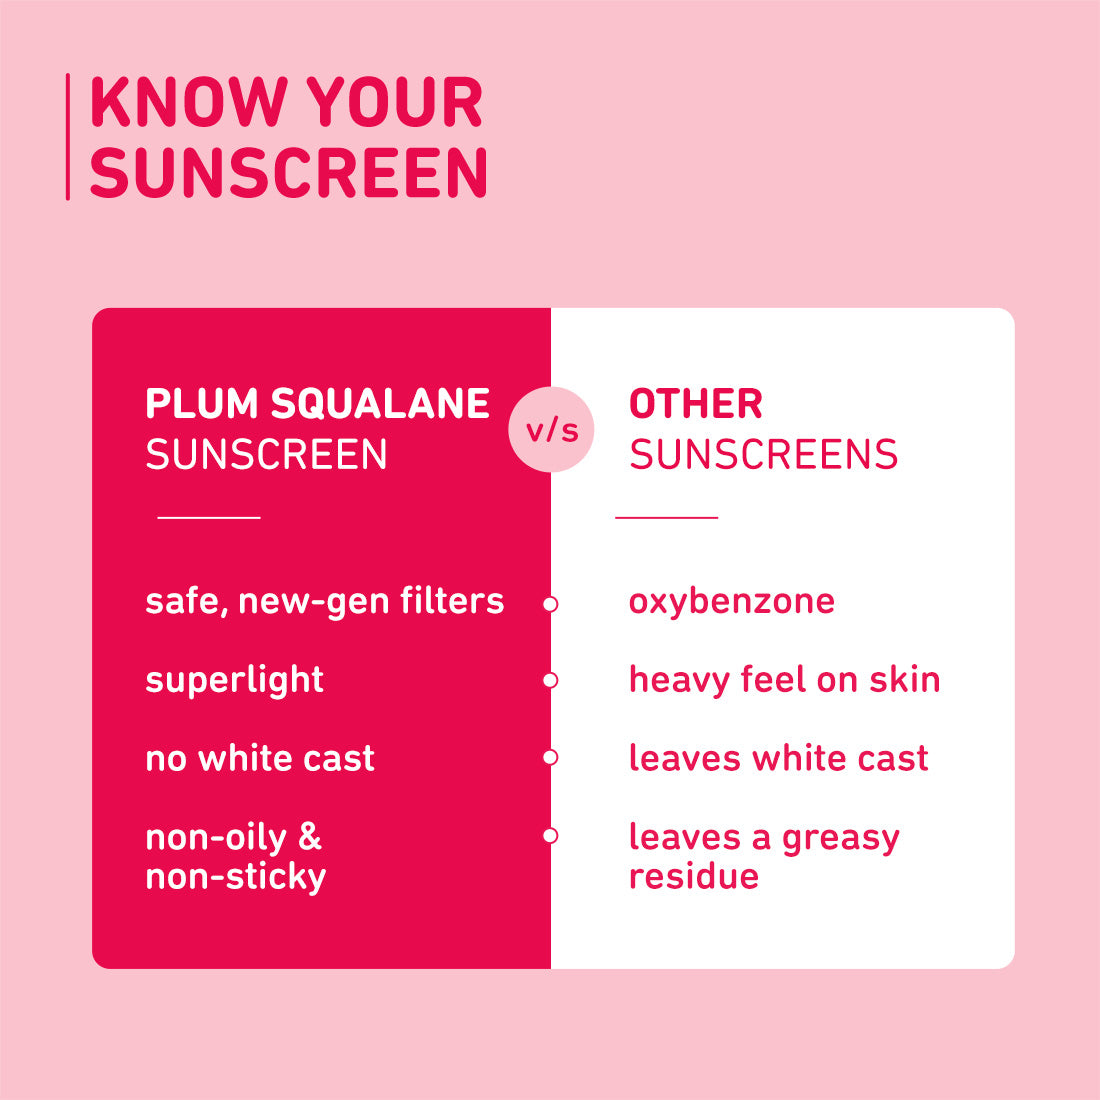 Squalane & Vitamin E SPF 50 PA+++ Dewy-Bright Sunscreen (Pack of 2)